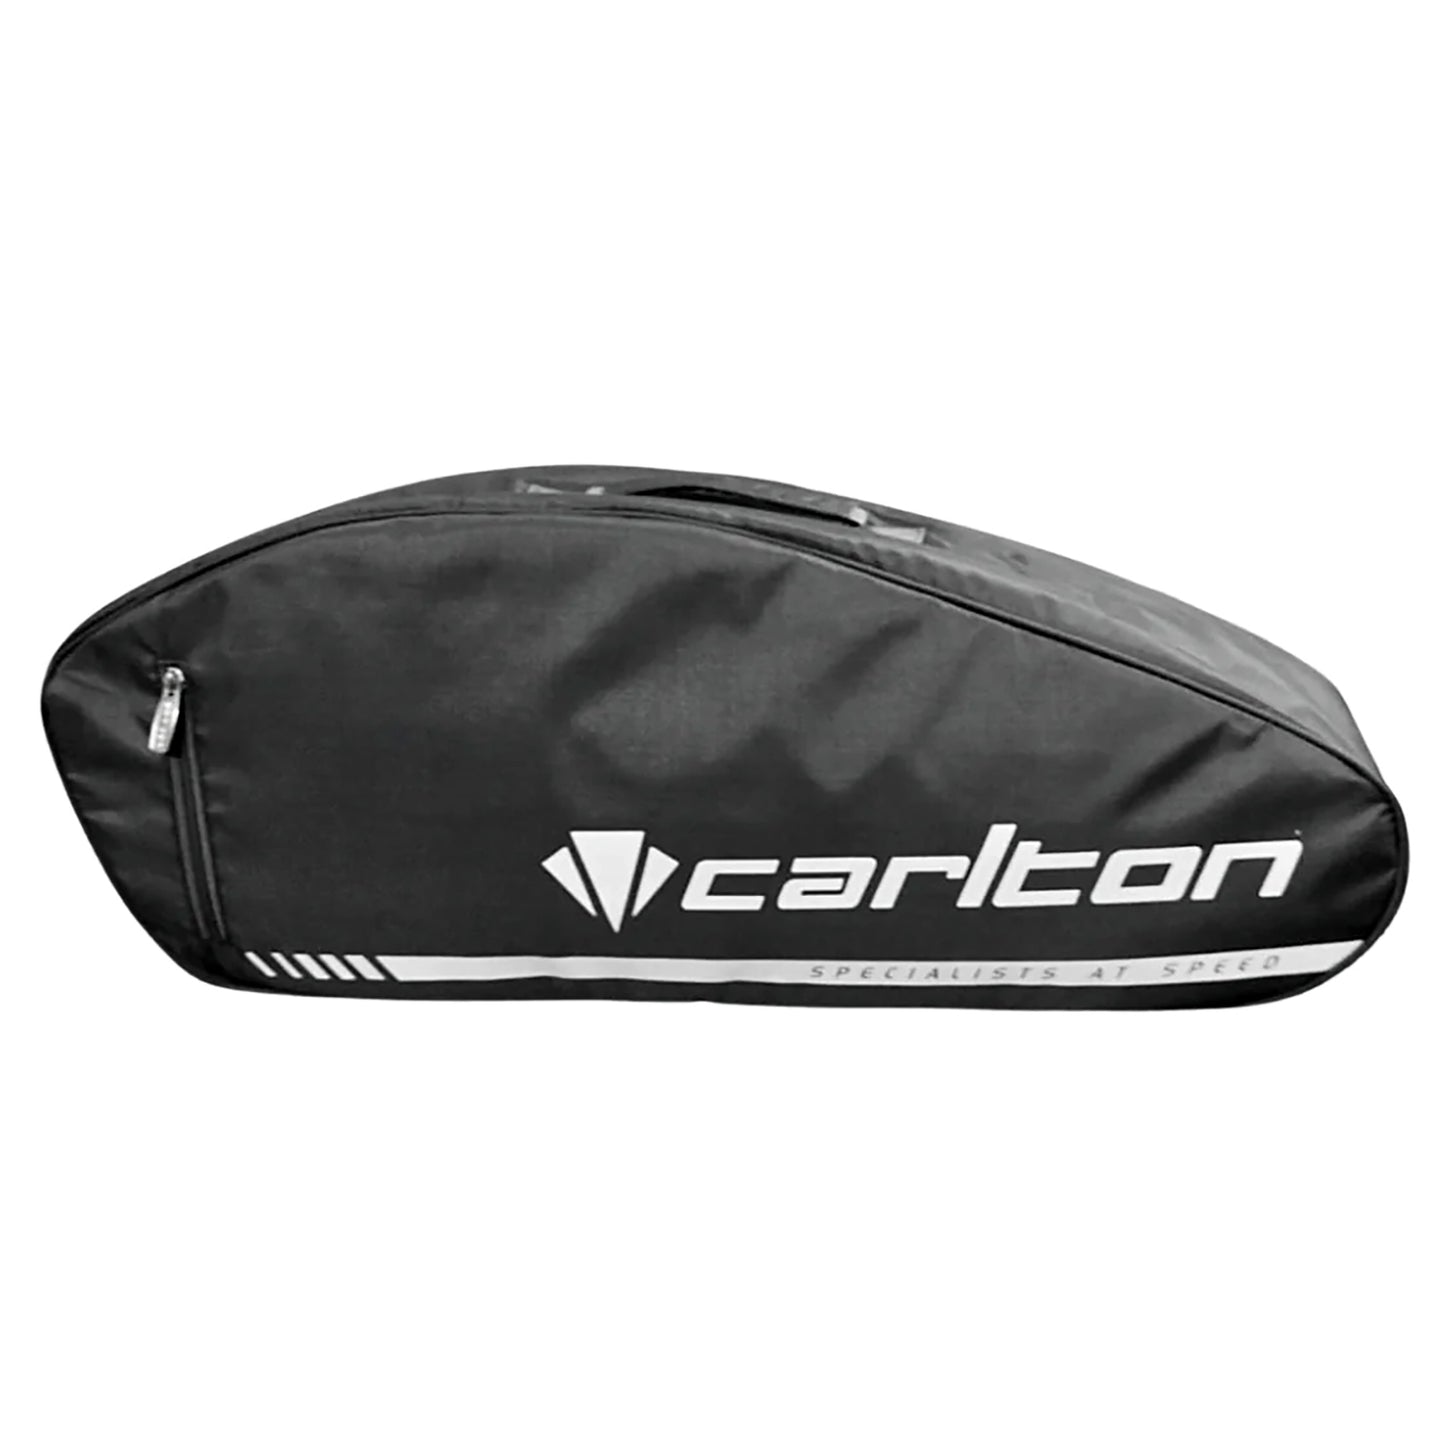 Carlton Air Edge 1-Compartment Badminton Kit Bag - Best Price online Prokicksports.com